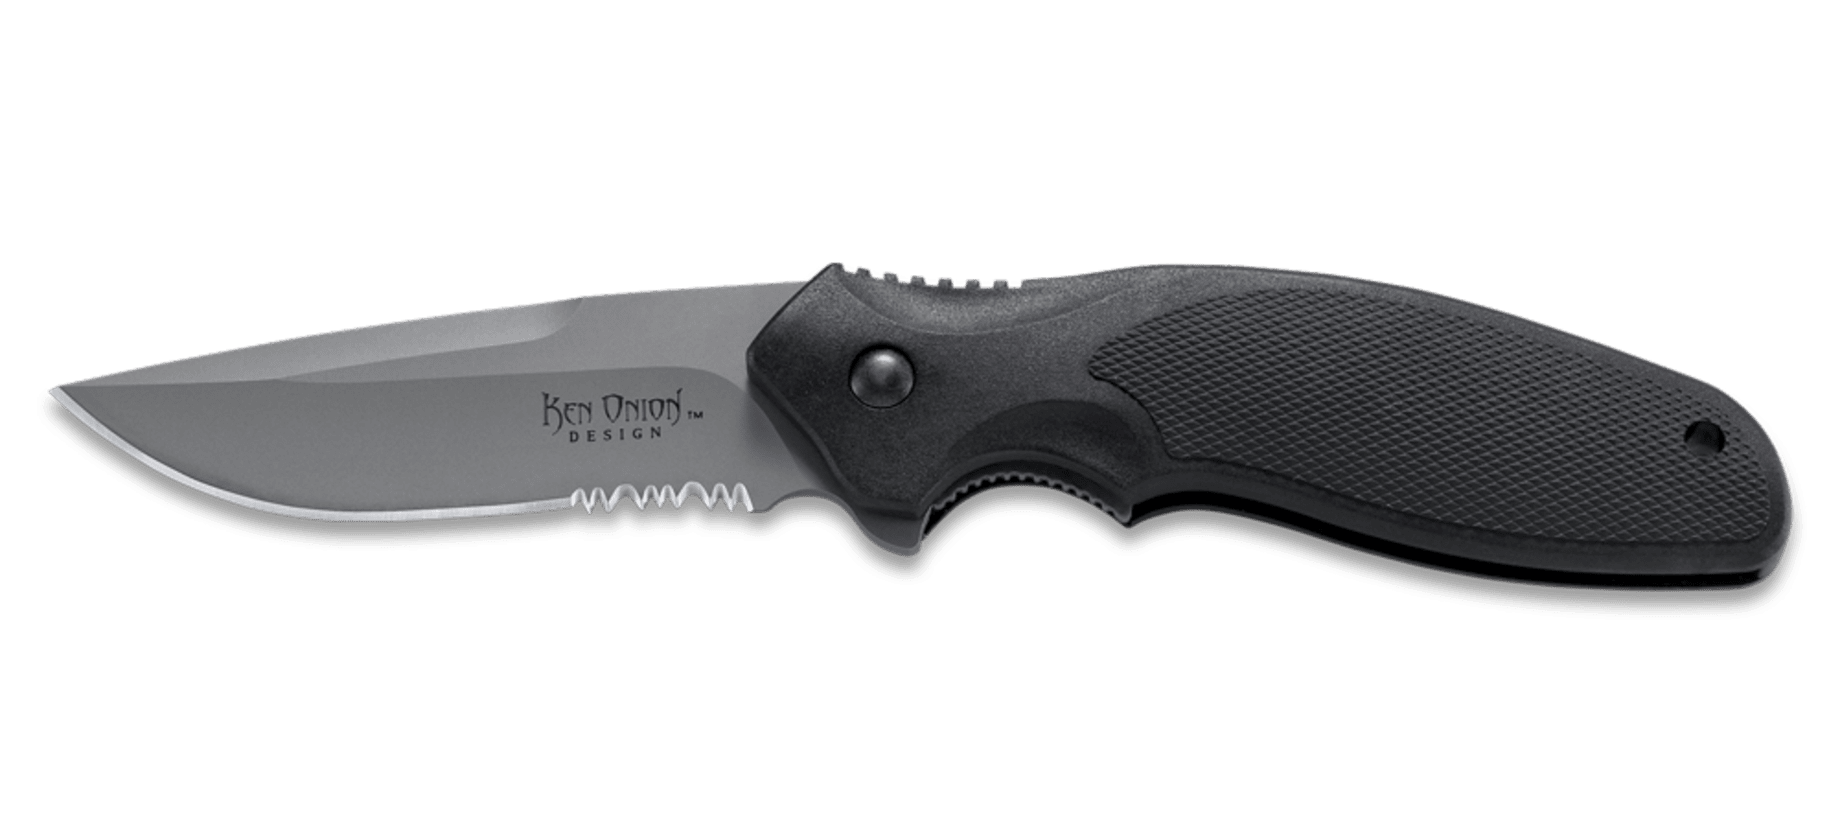 фото Складной нож crkt shenanigan™ z combo, сталь aus-8, рукоять термопластик grn